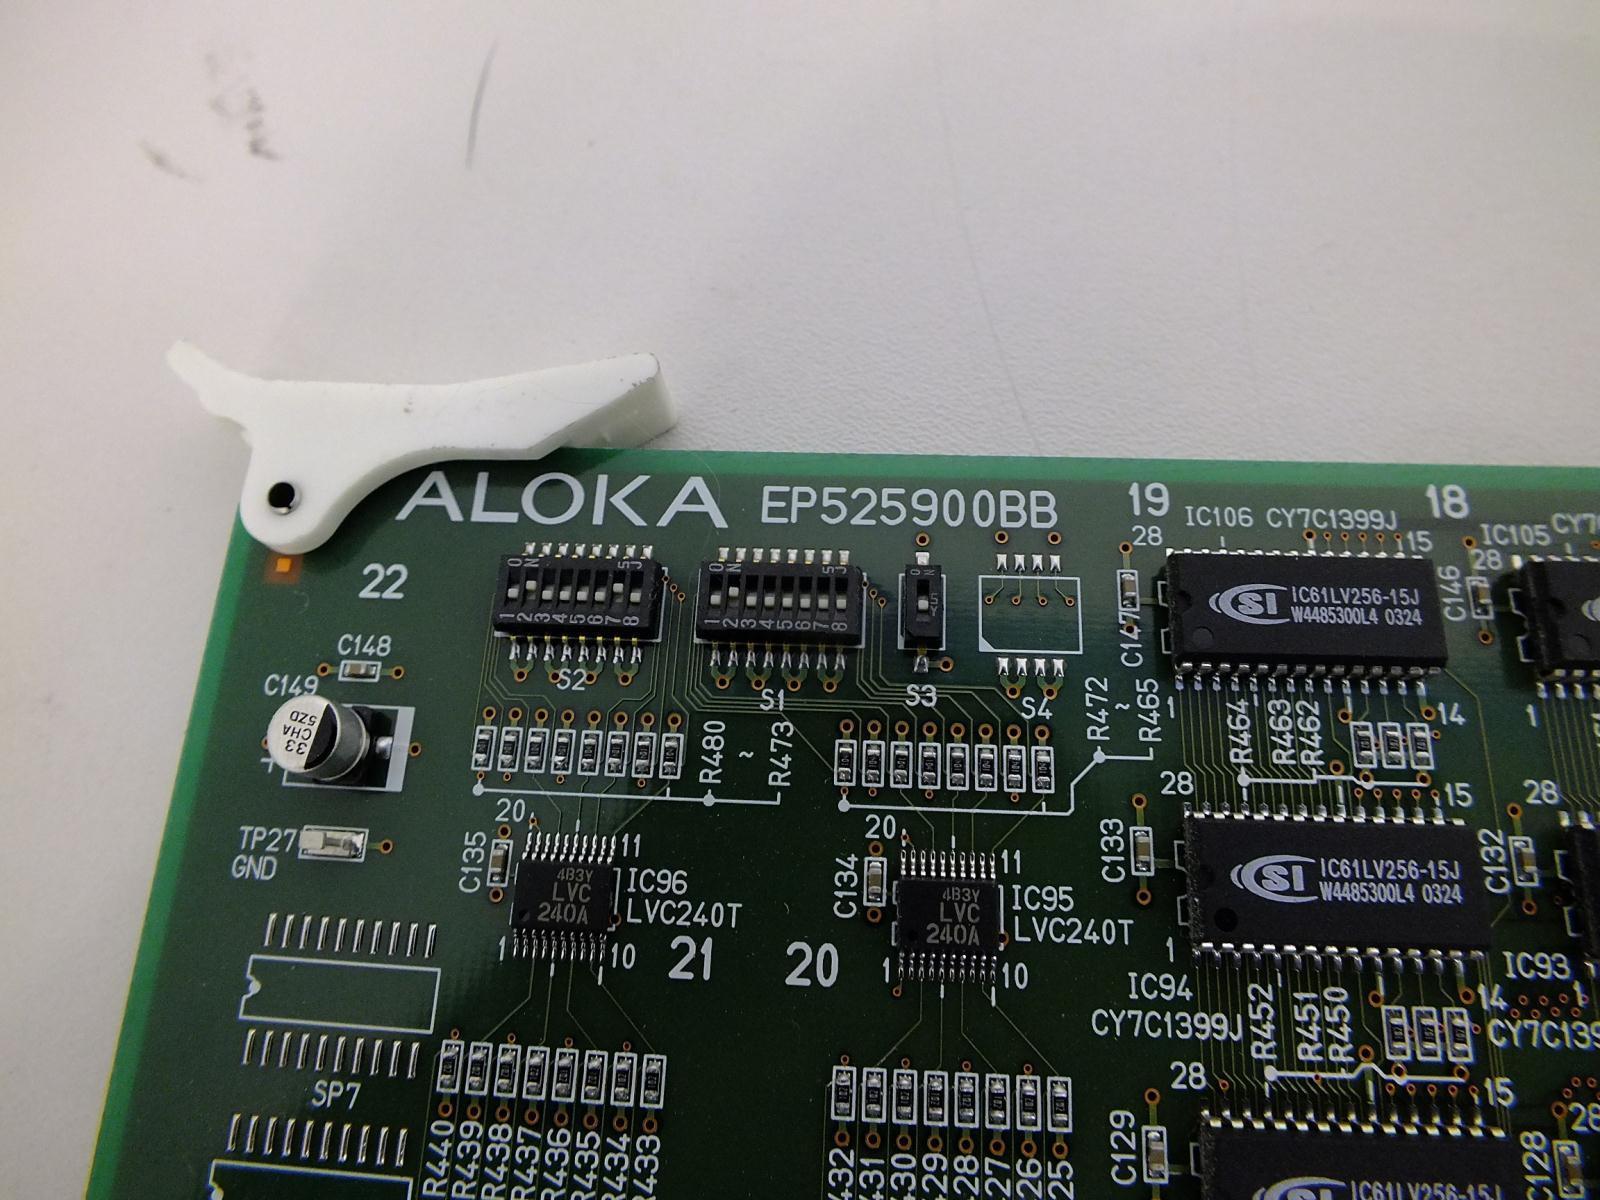 Aloka Prosound Ultrasound SSD-3500SV Board EP525900BB DIAGNOSTIC ULTRASOUND MACHINES FOR SALE